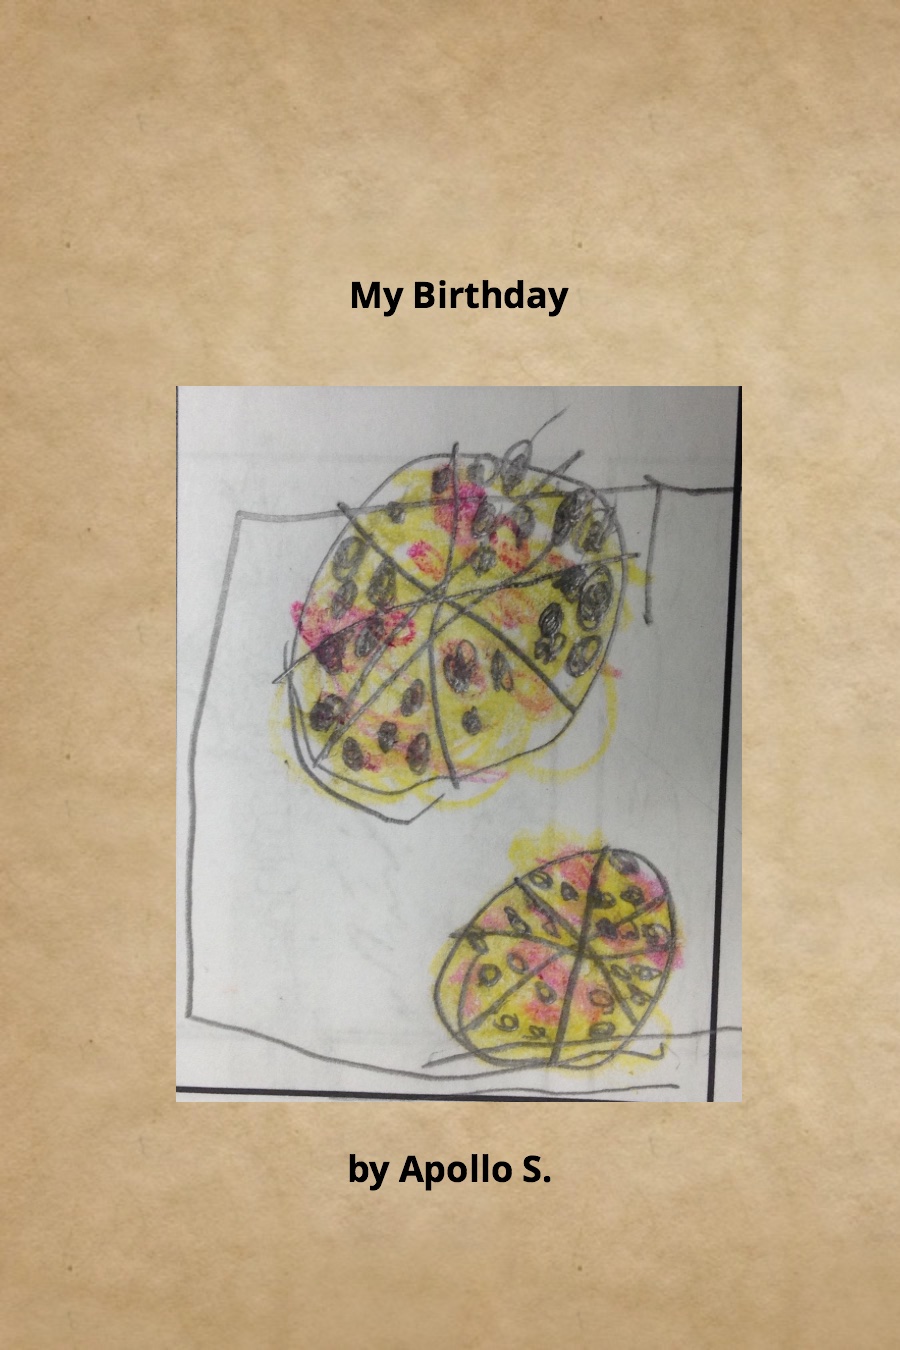 My Birthday by Apollo S